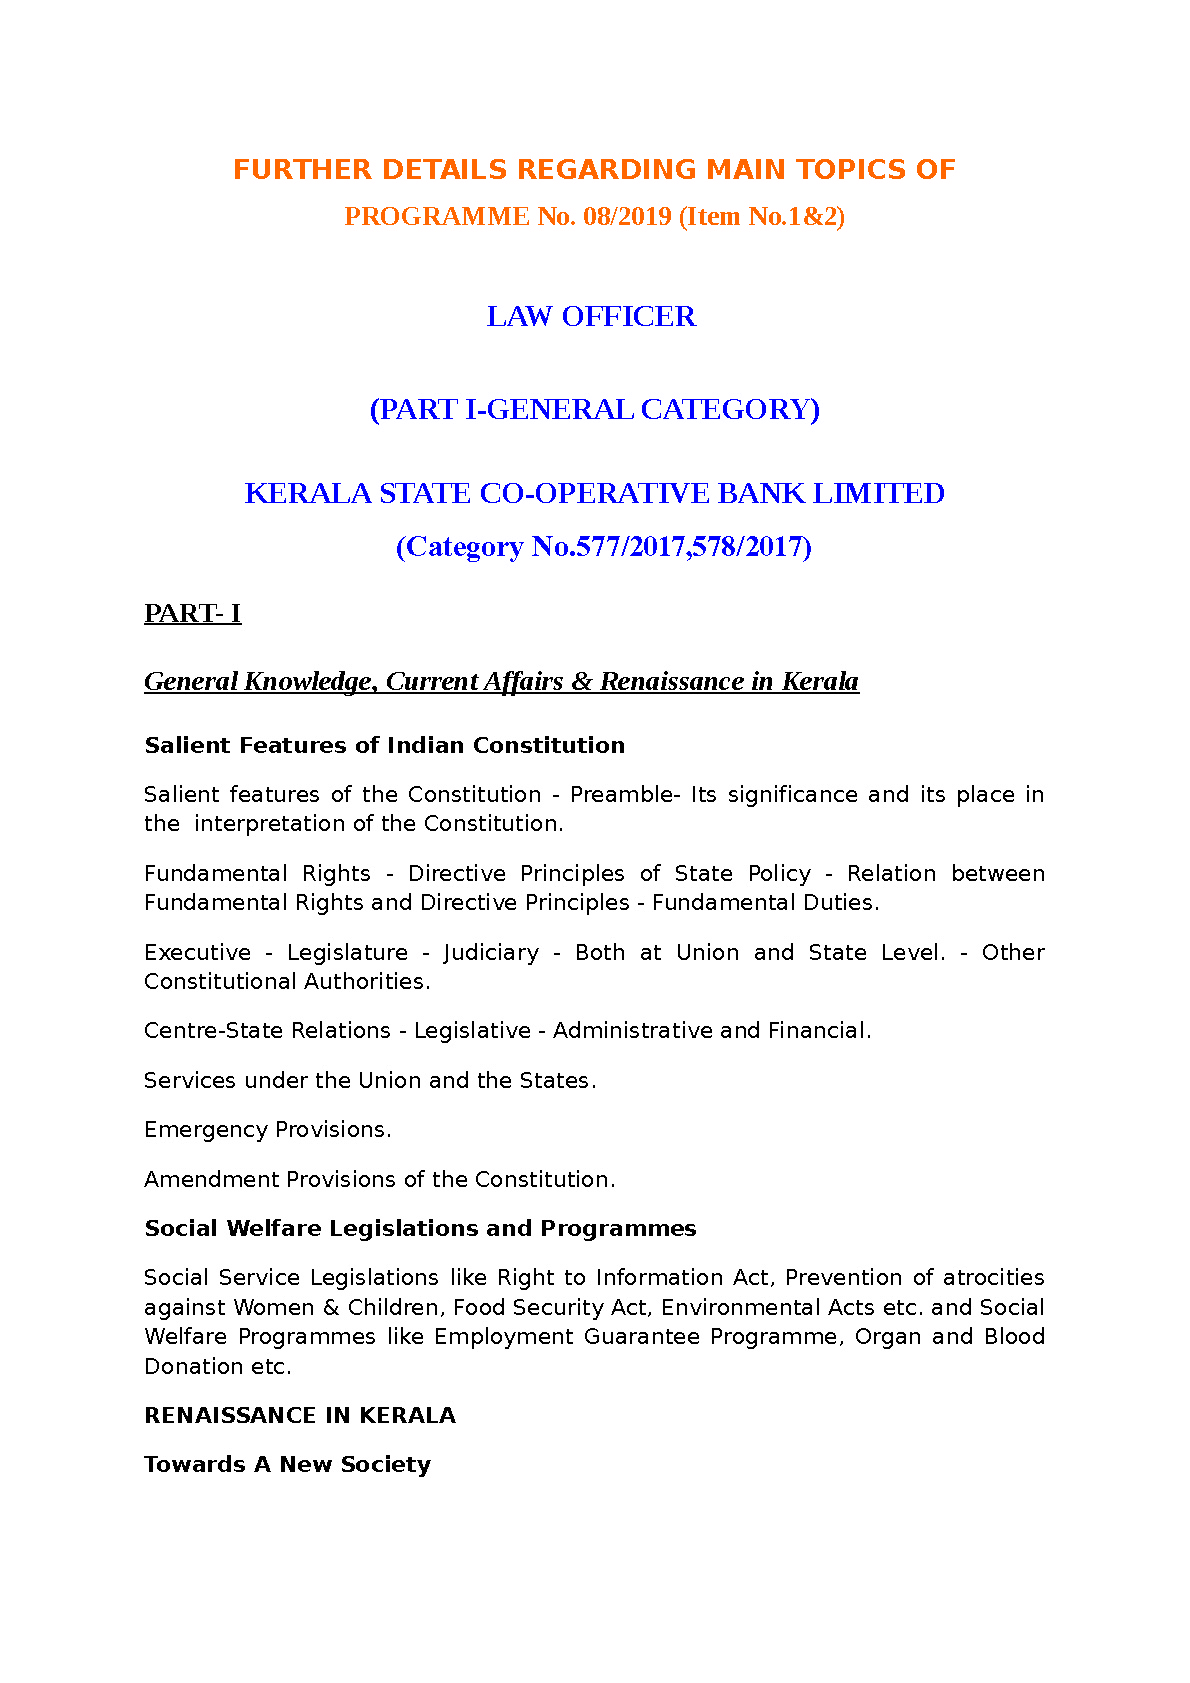 Kerala PSC Law Officer Exam Syllabus Aug 2019 - Notification Image 1